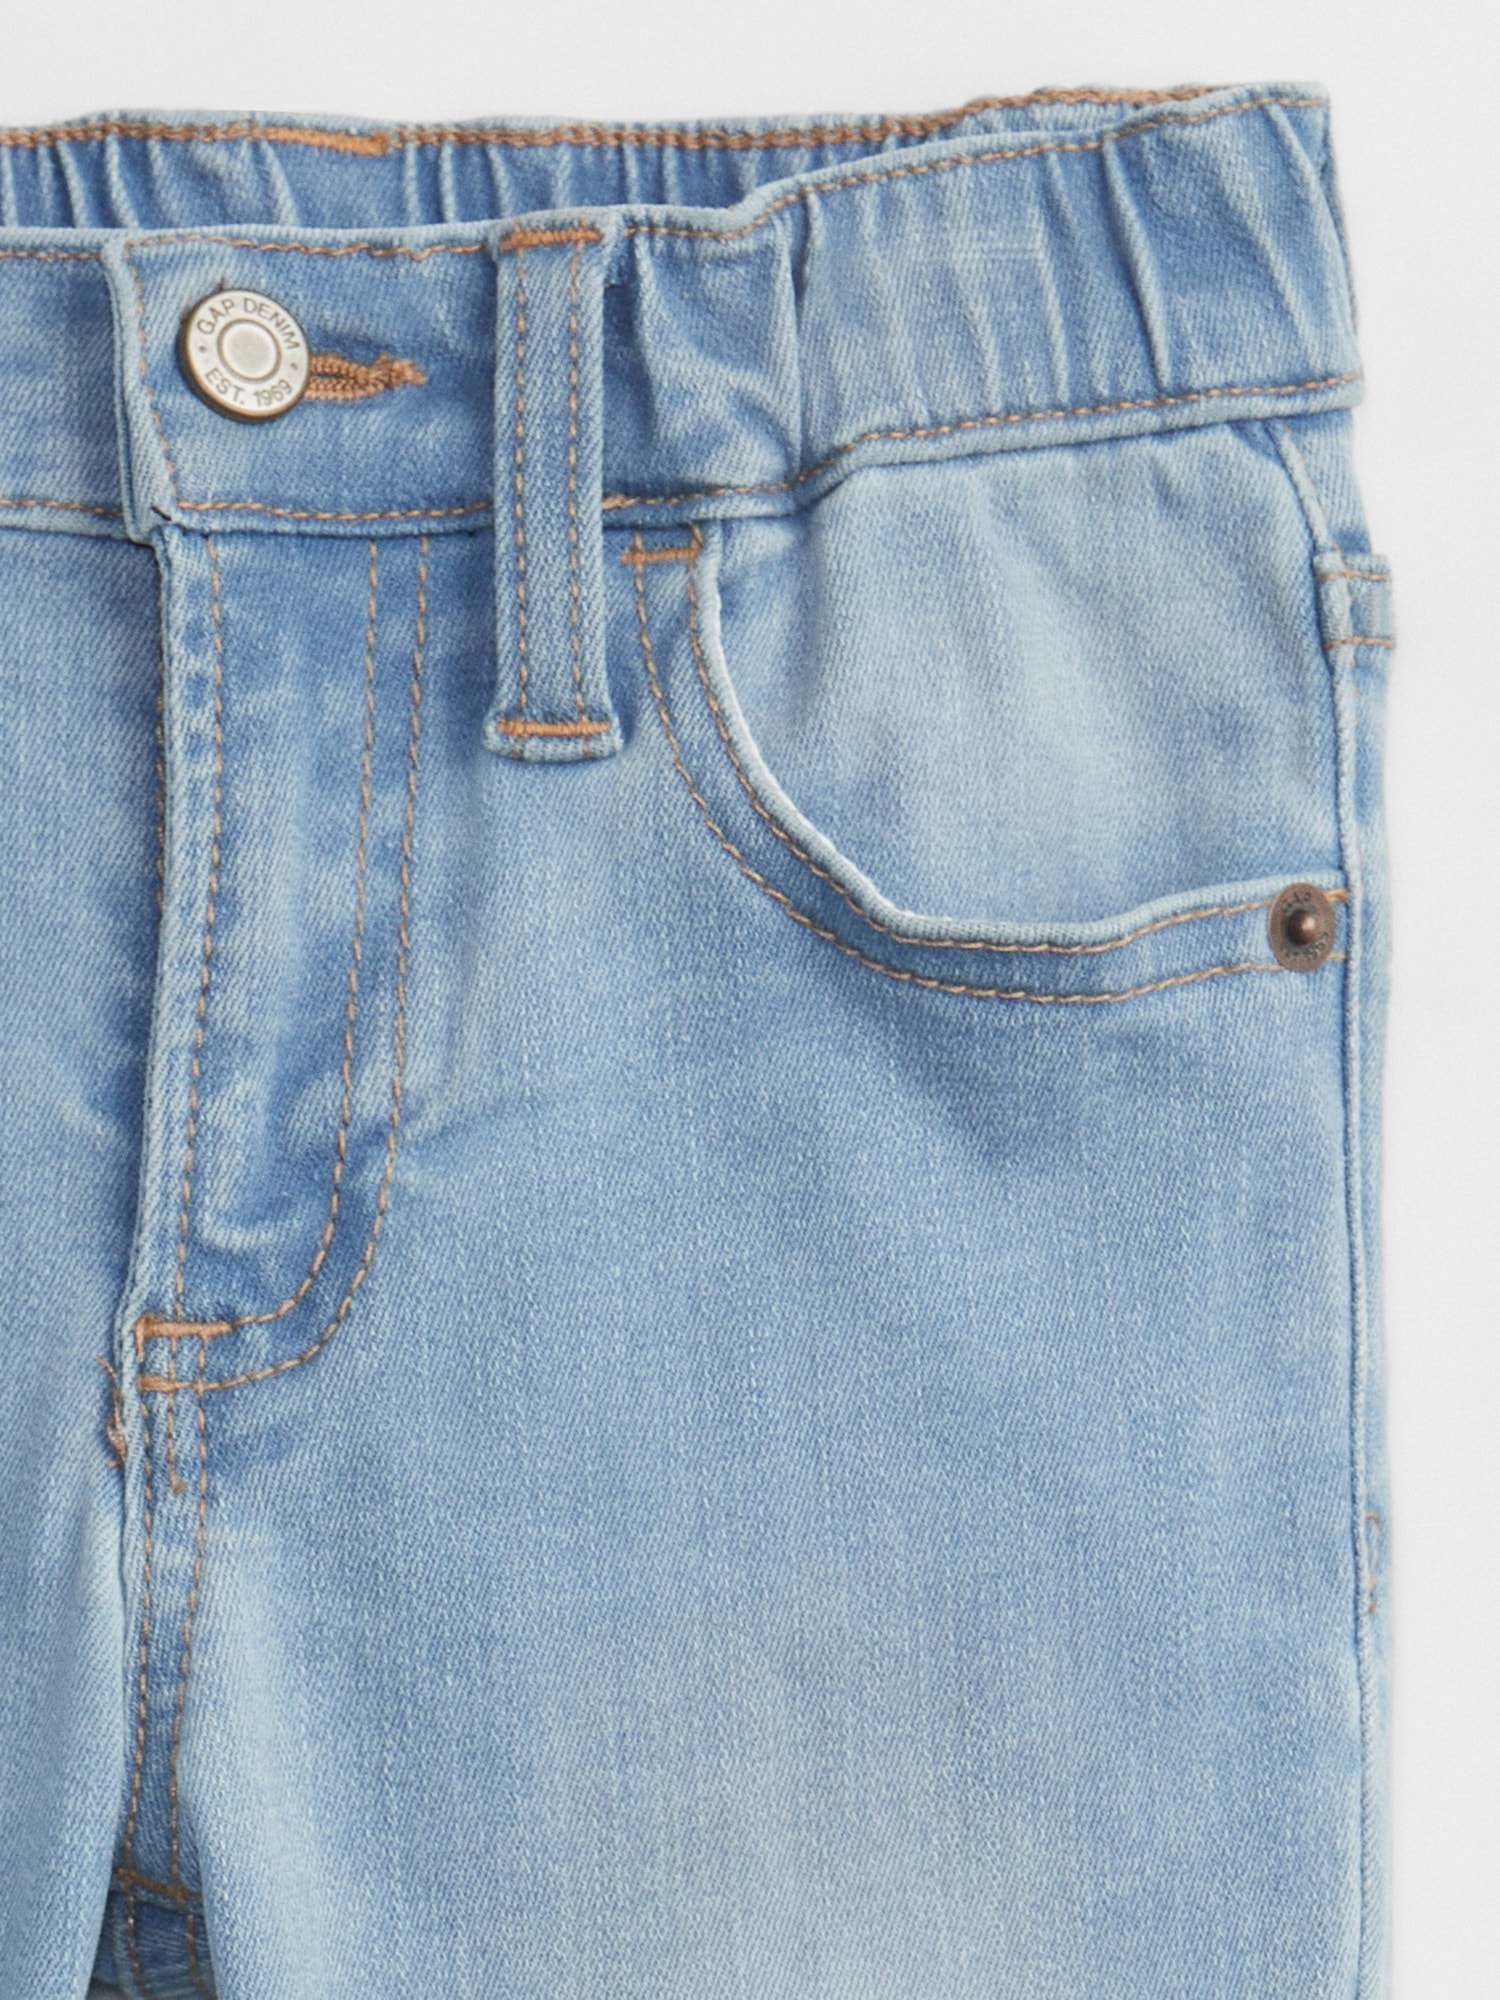 babyGap Skinny Jeans | Gap Factory